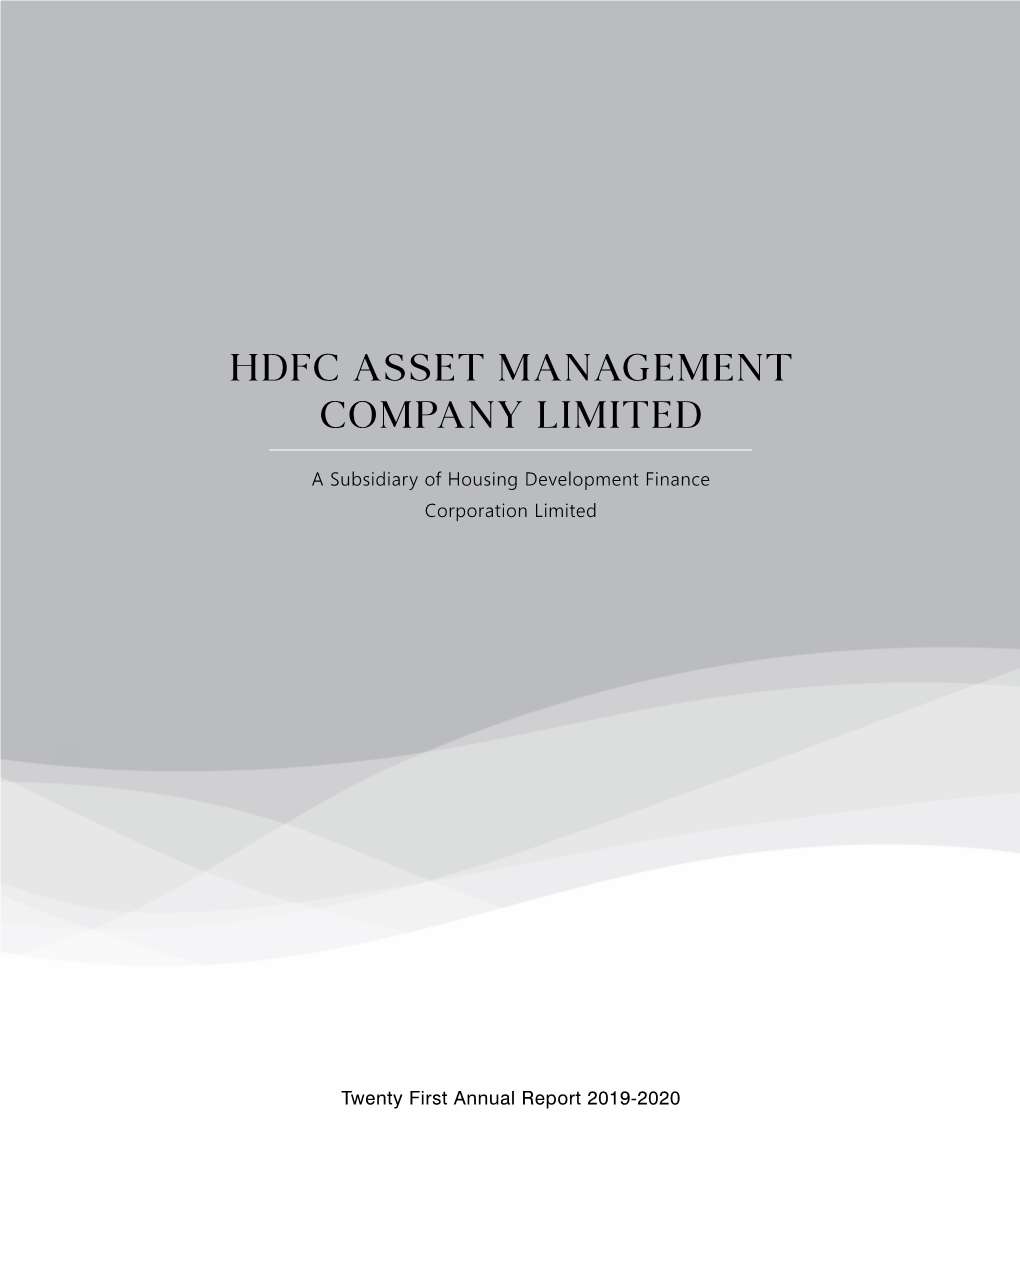 Hdfc-Asset-Management-Company